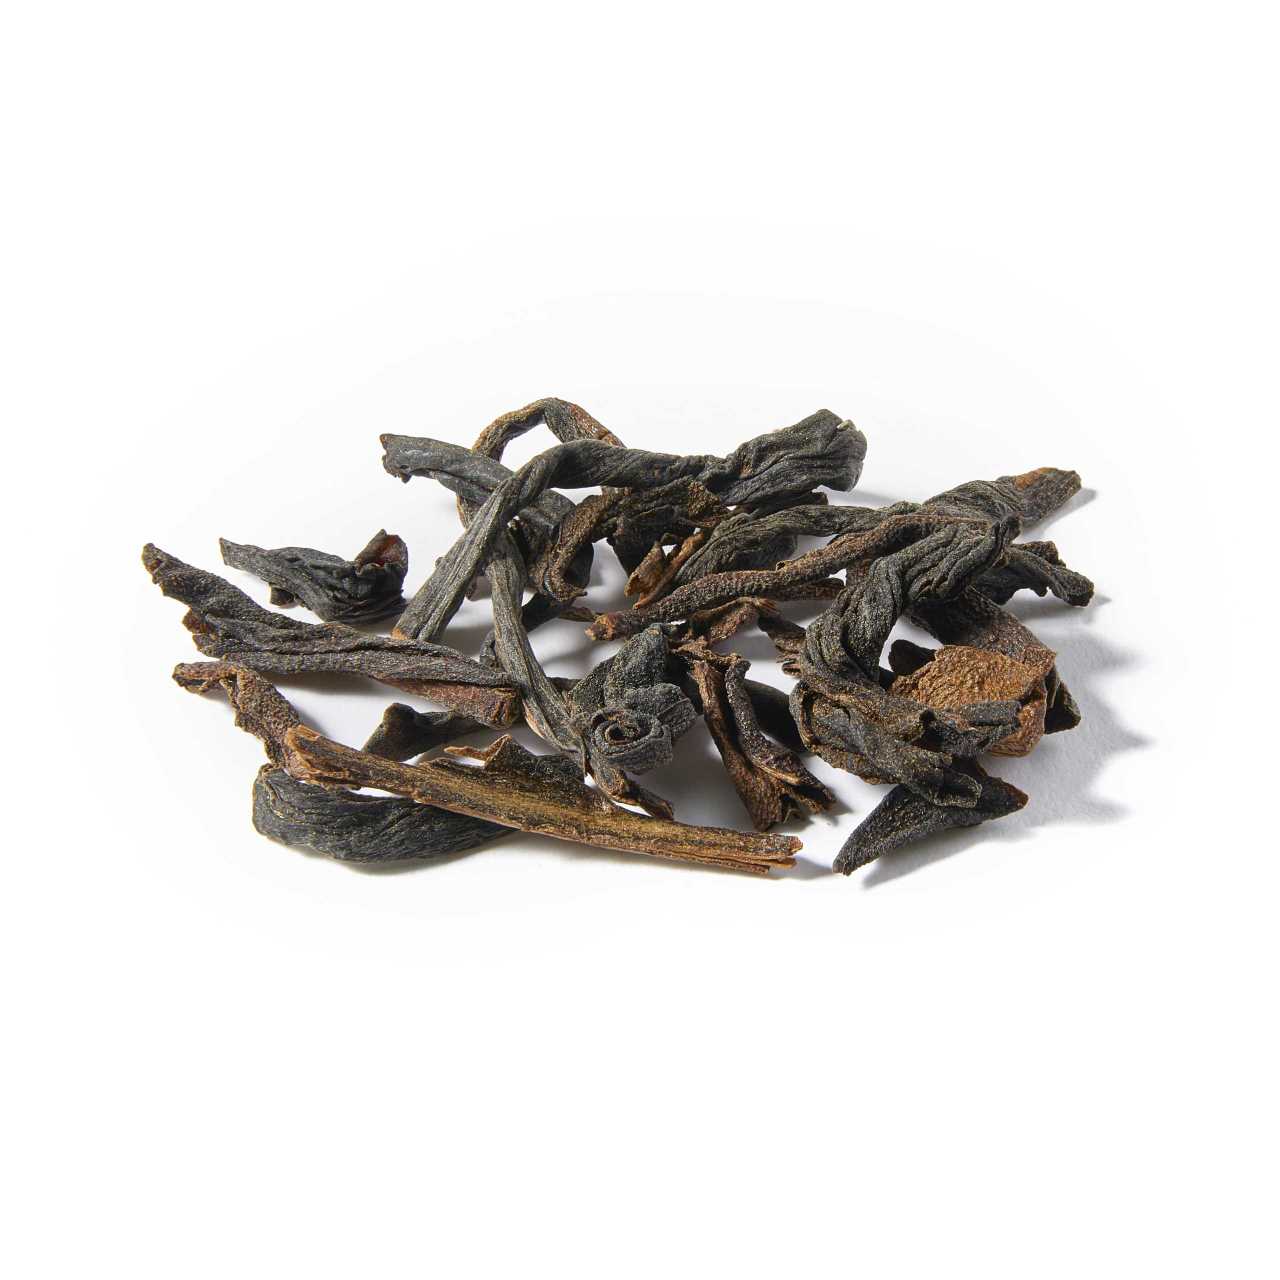 A macro pile of Decaffeinated Ceylon Loose Tea